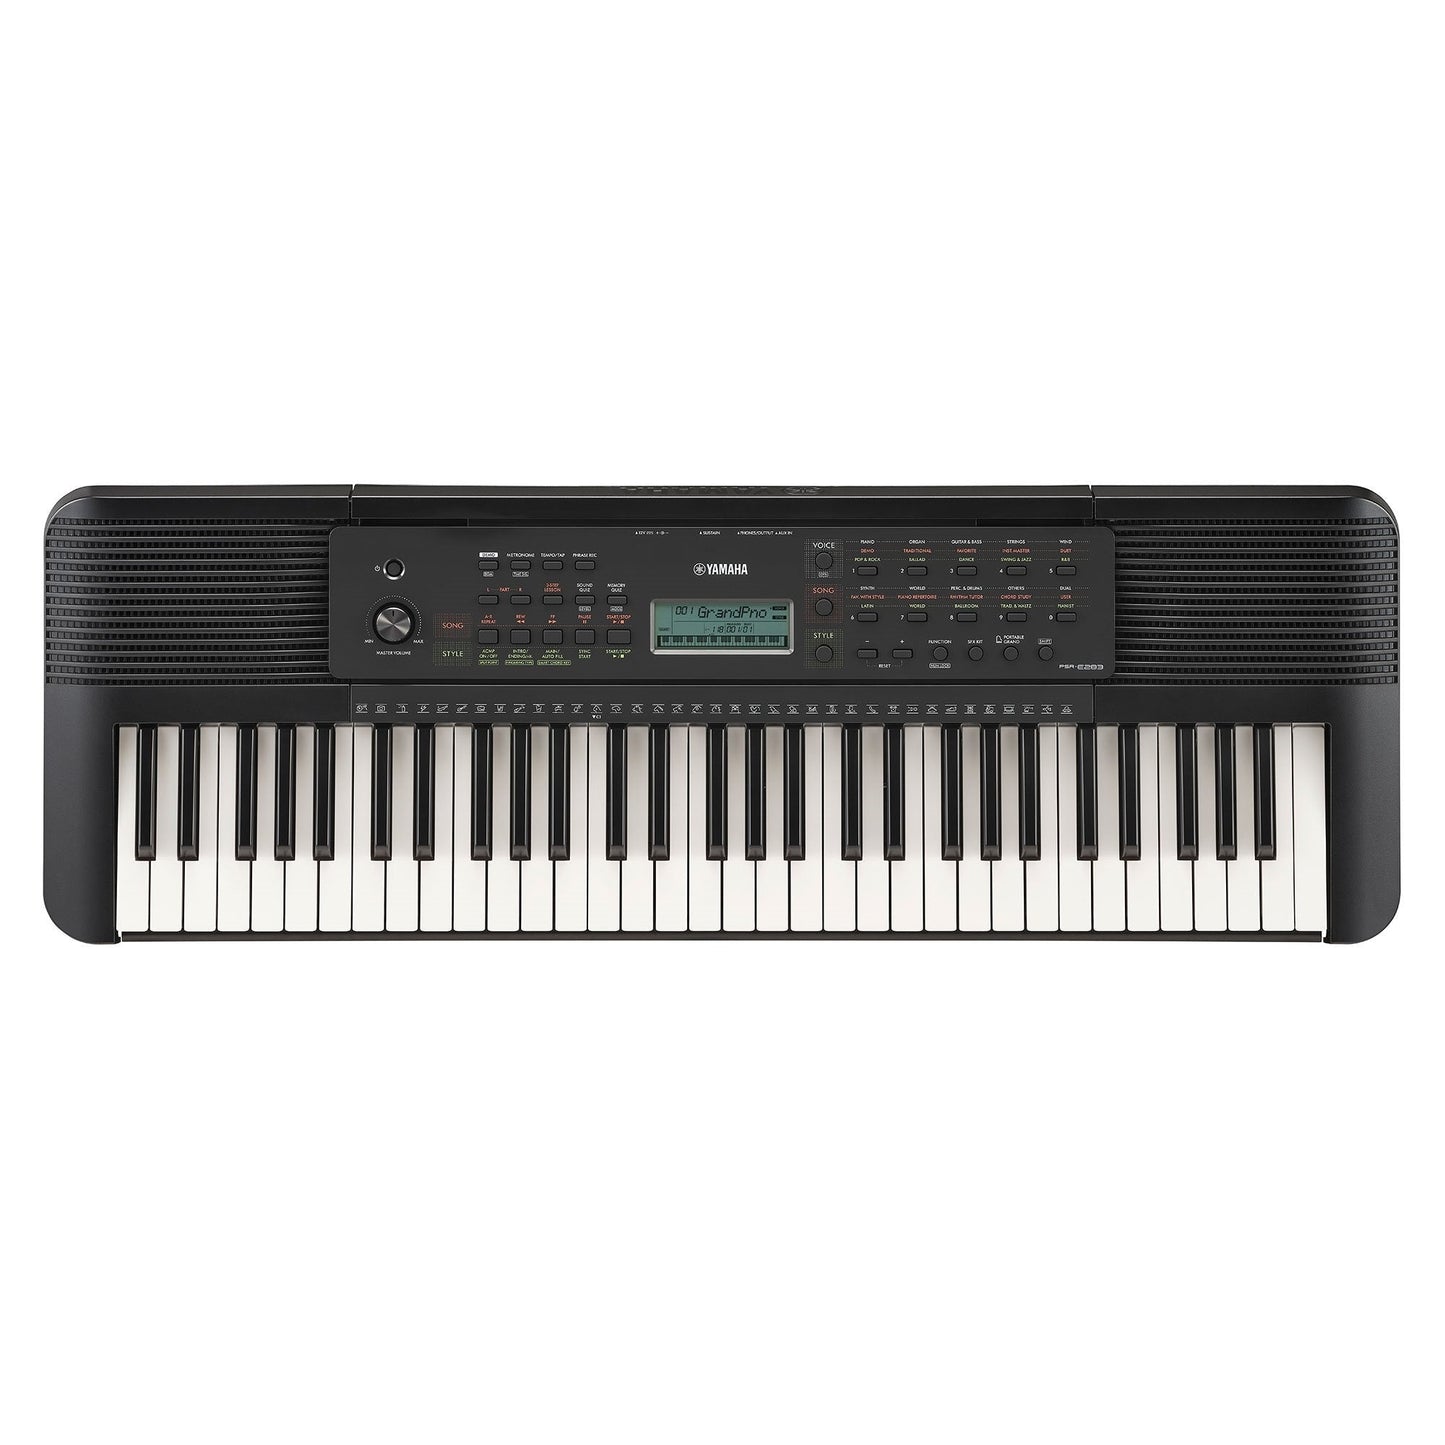 [DEMO UNIT] Yamaha PSR-e283 61-Key Portable Keyboard